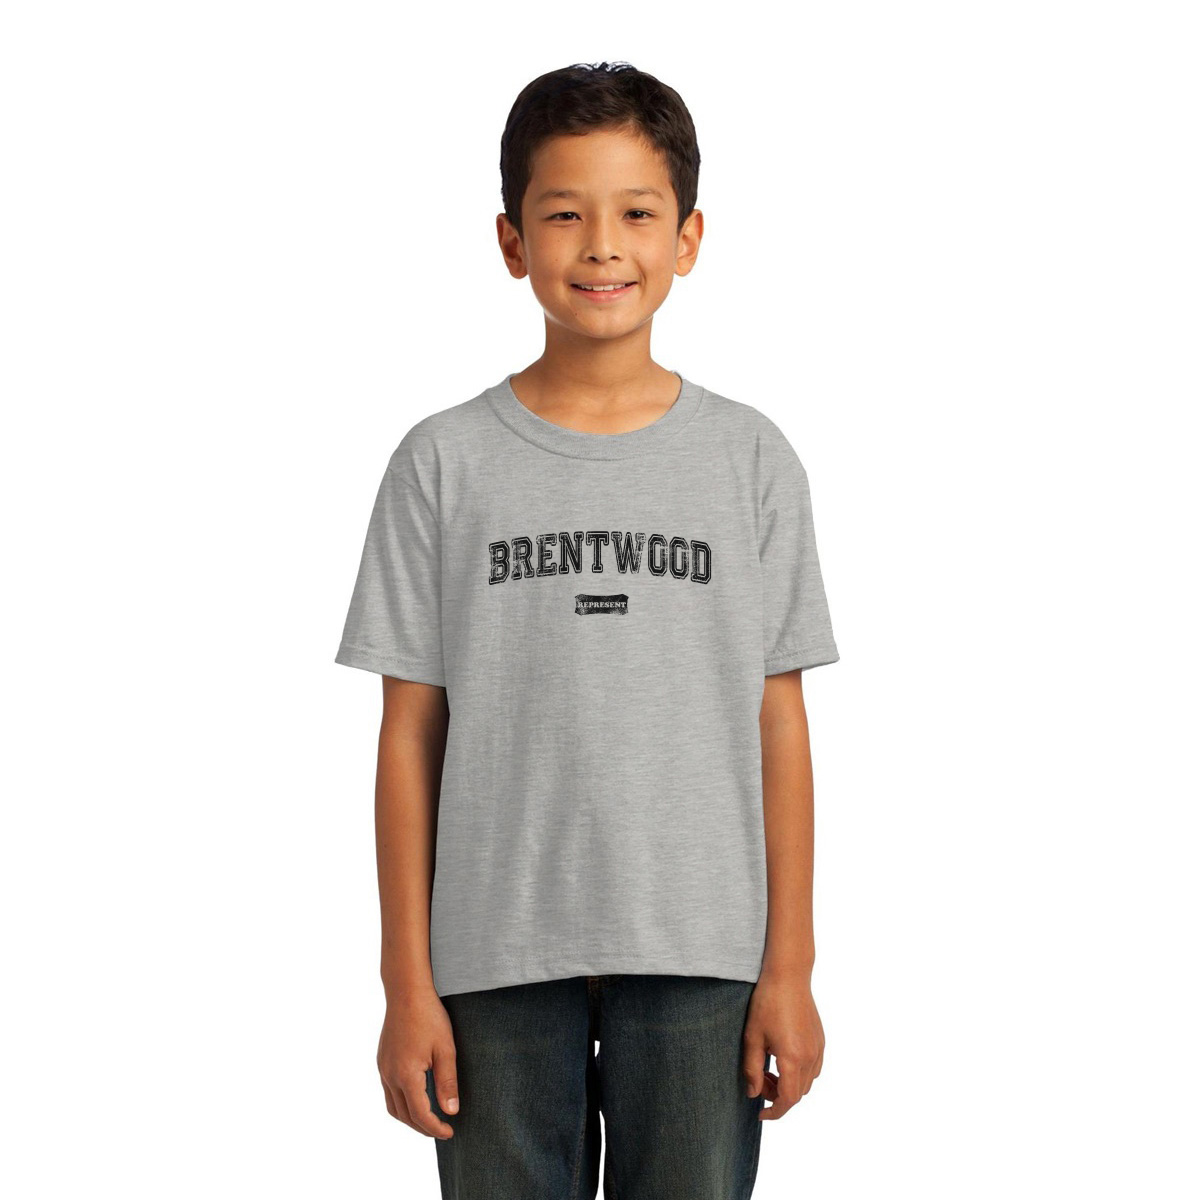 Brentwood Represent Toddler T-shirt | Gray